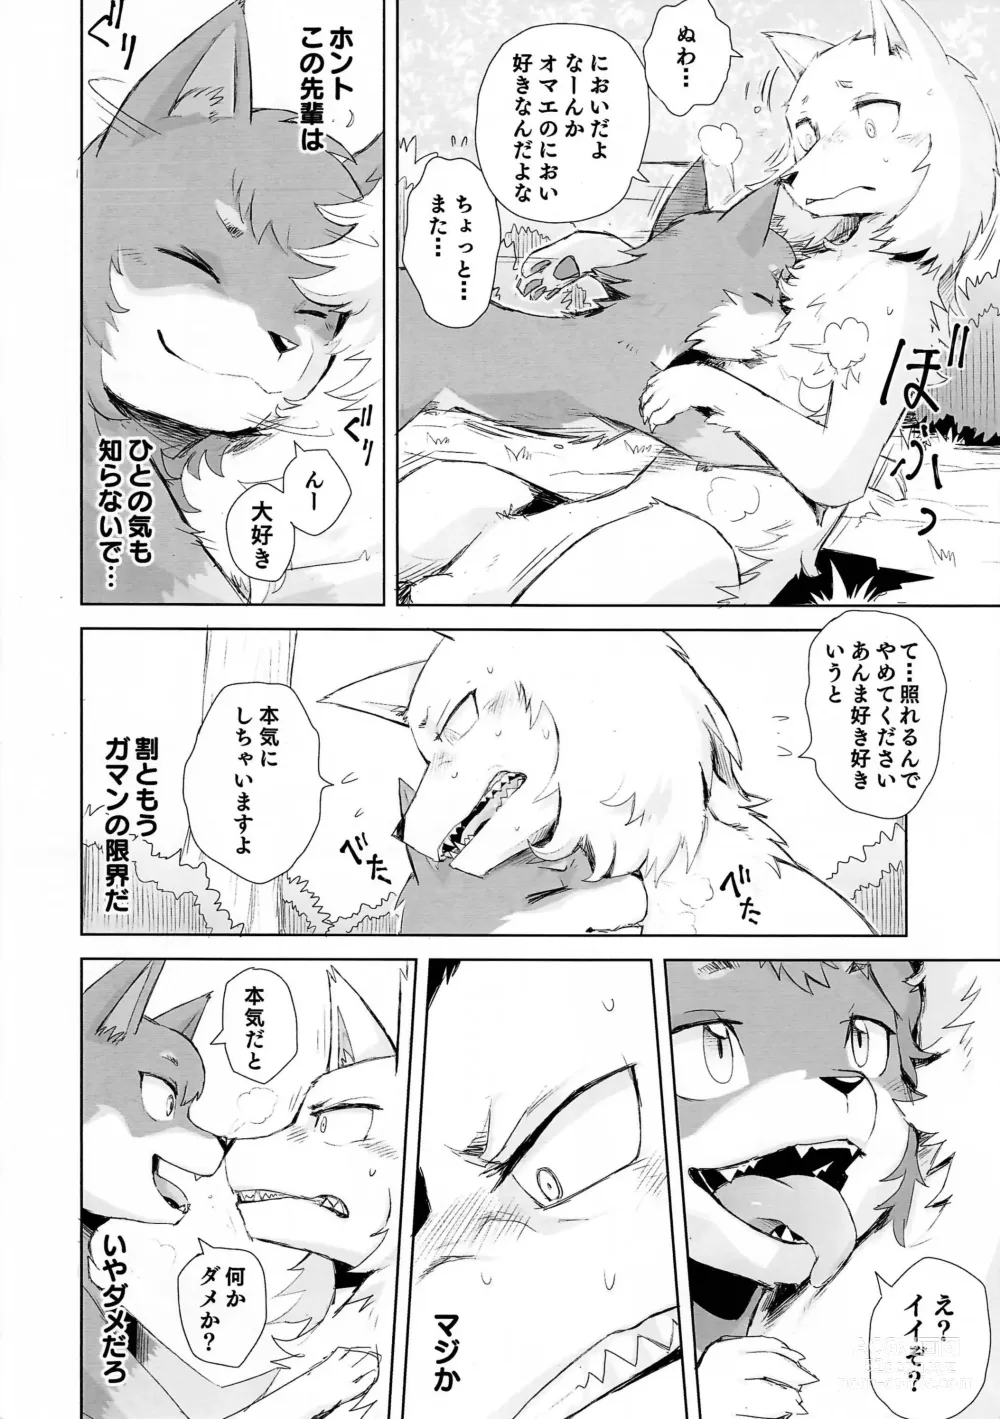 Page 35 of doujinshi Dearest 2